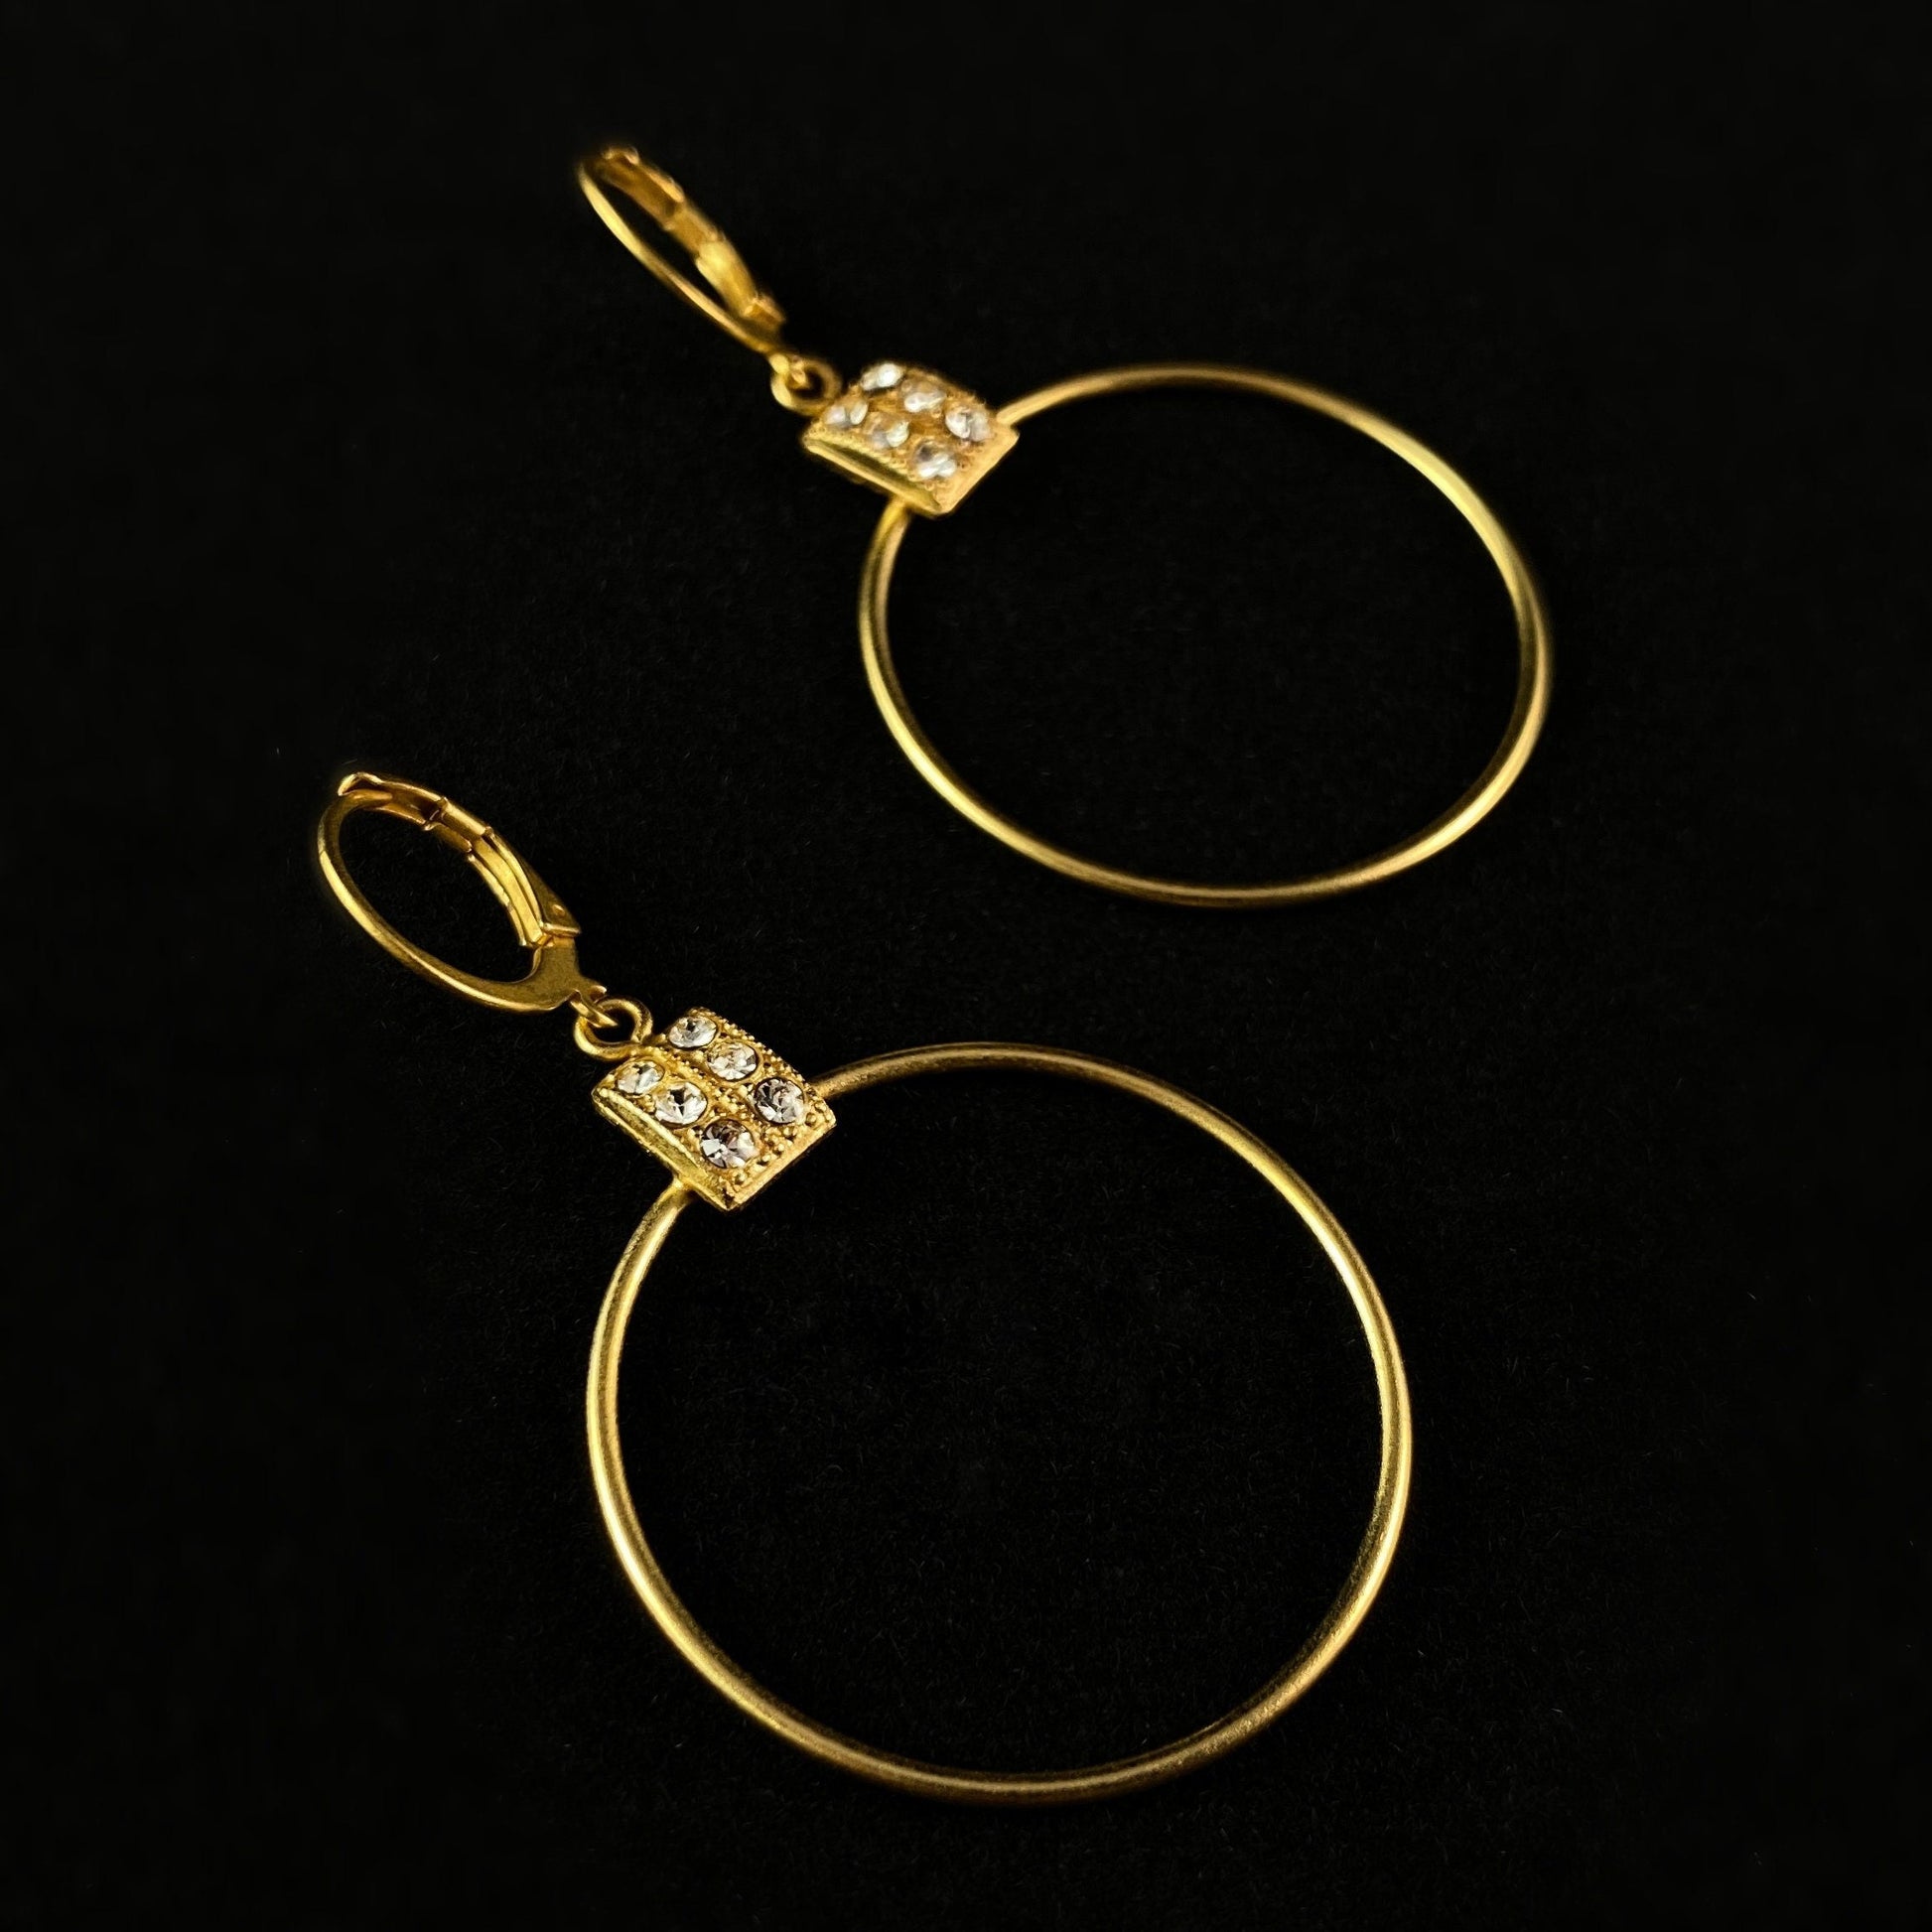 Hoop Earrings with Swarovski Crystal Accent - La Vie Parisienne by Catherine Popesco